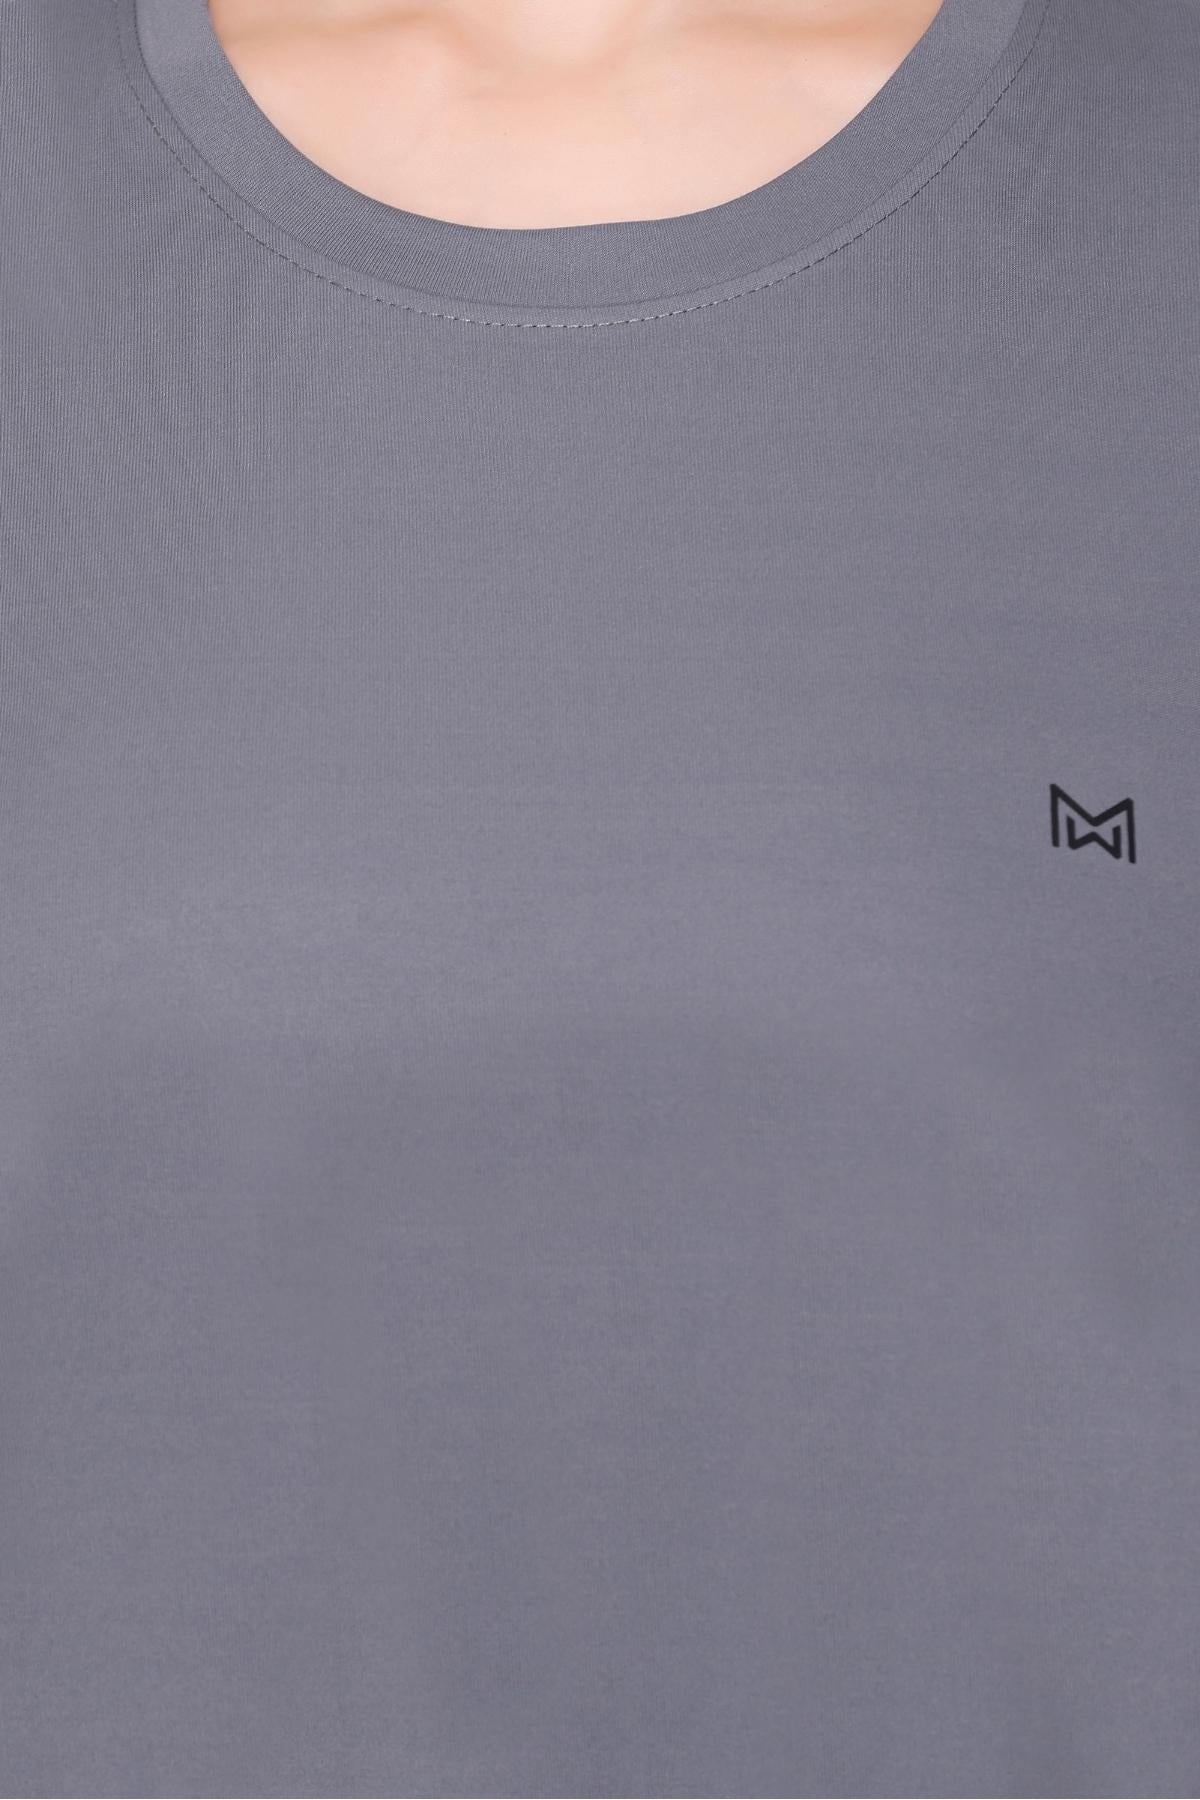 White Moon Women Self Design Round Neck Polyester Sports Gym T-Shirt